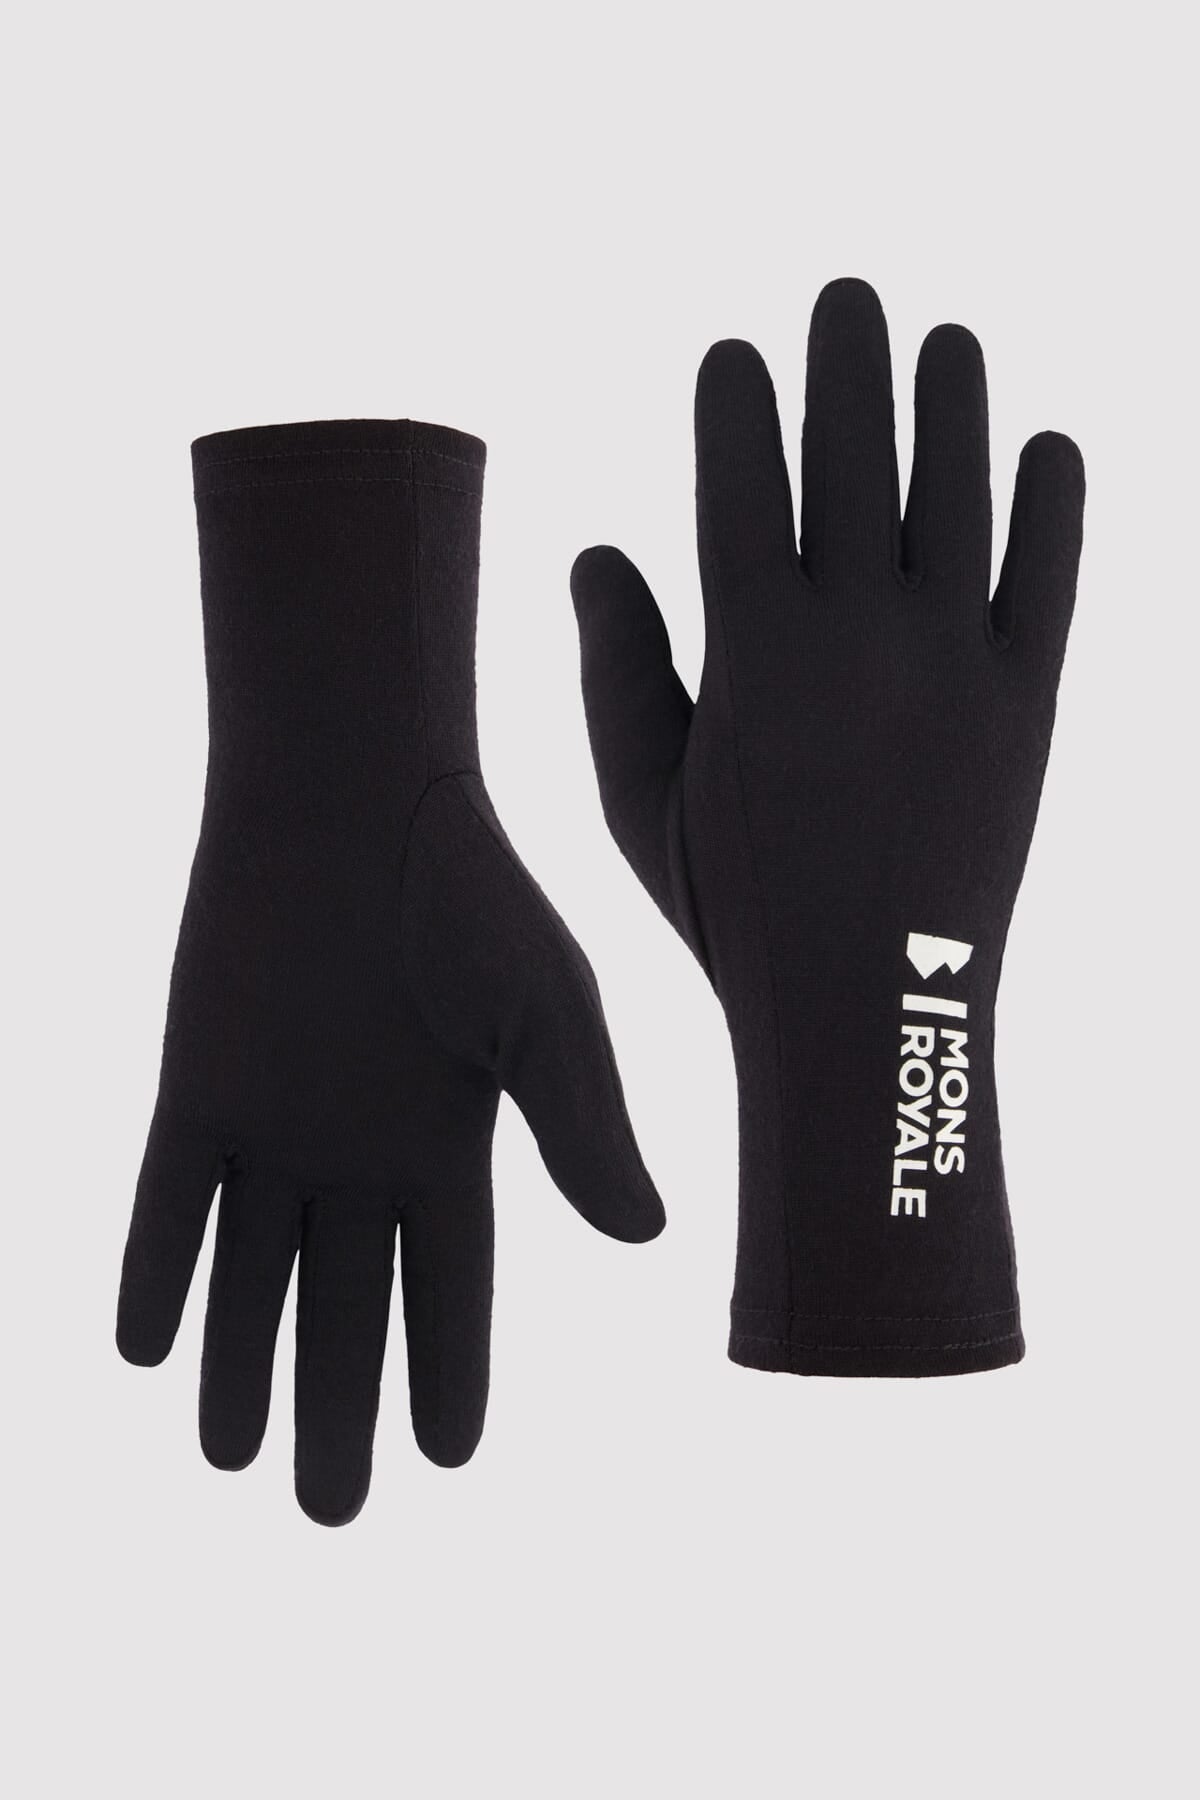 Olympus Merino Glove Liner - Black